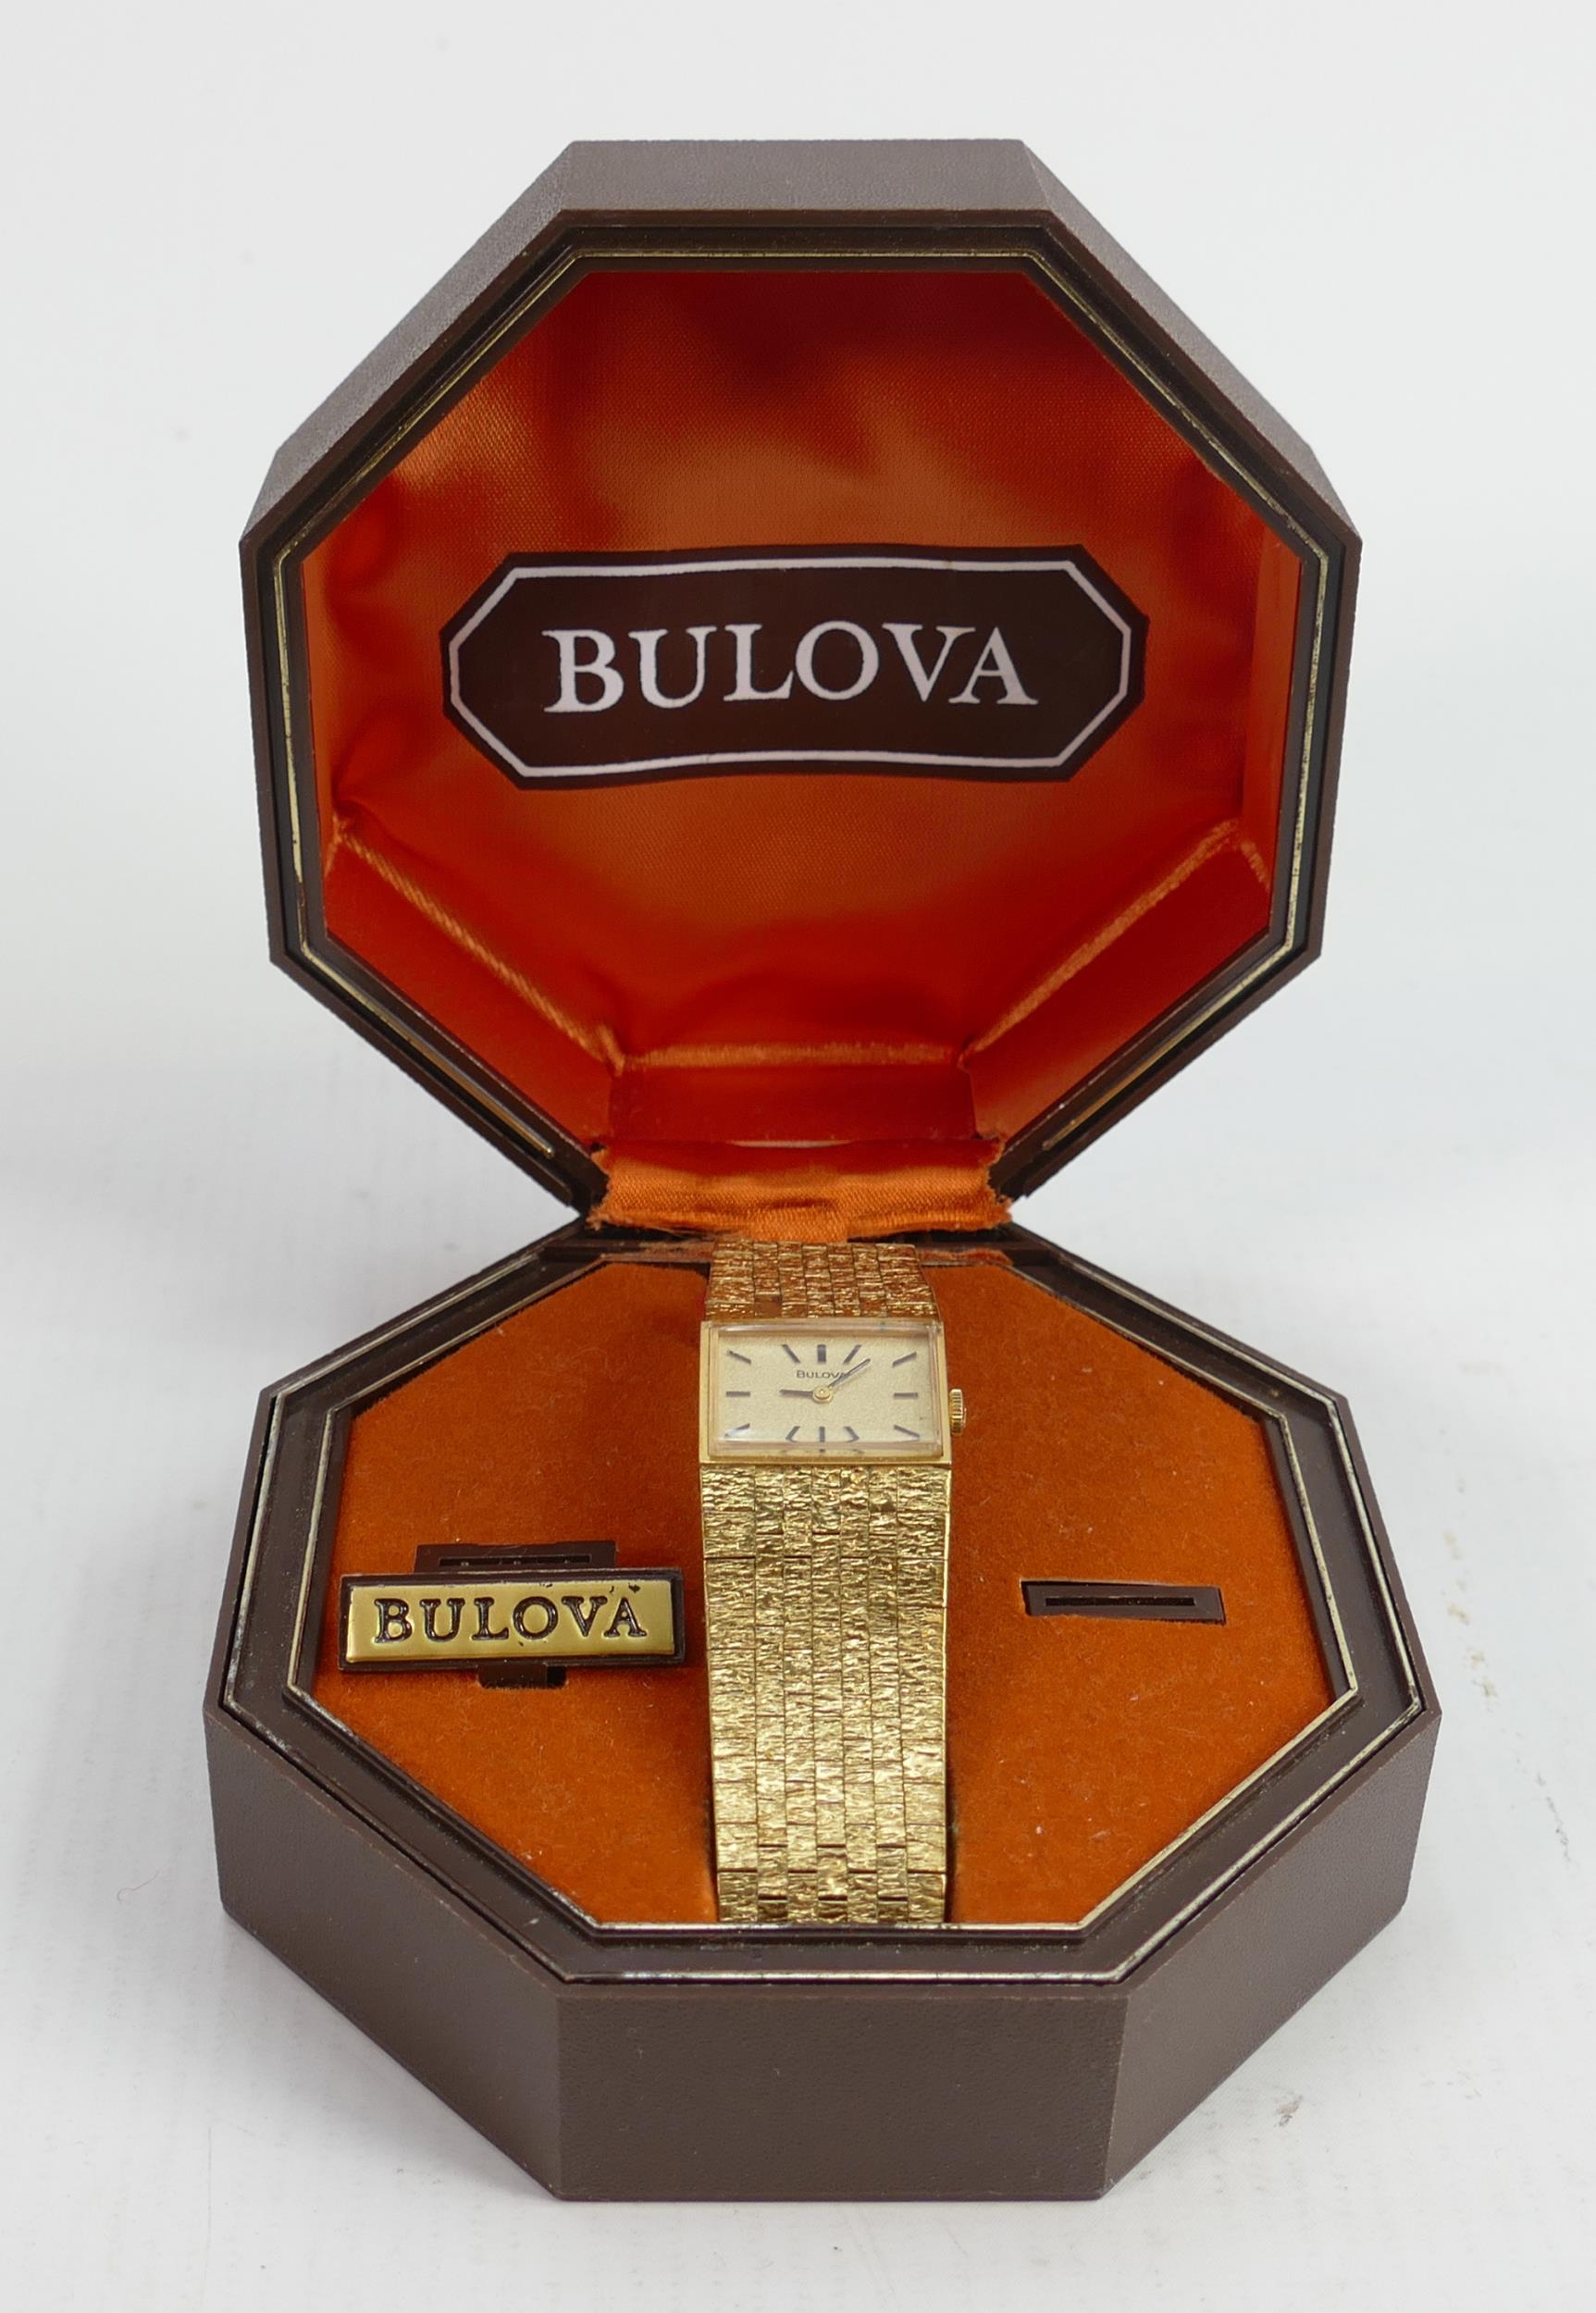 Ladies Bulova 1970s gold plated wristwatch: in ticking order, in original box.